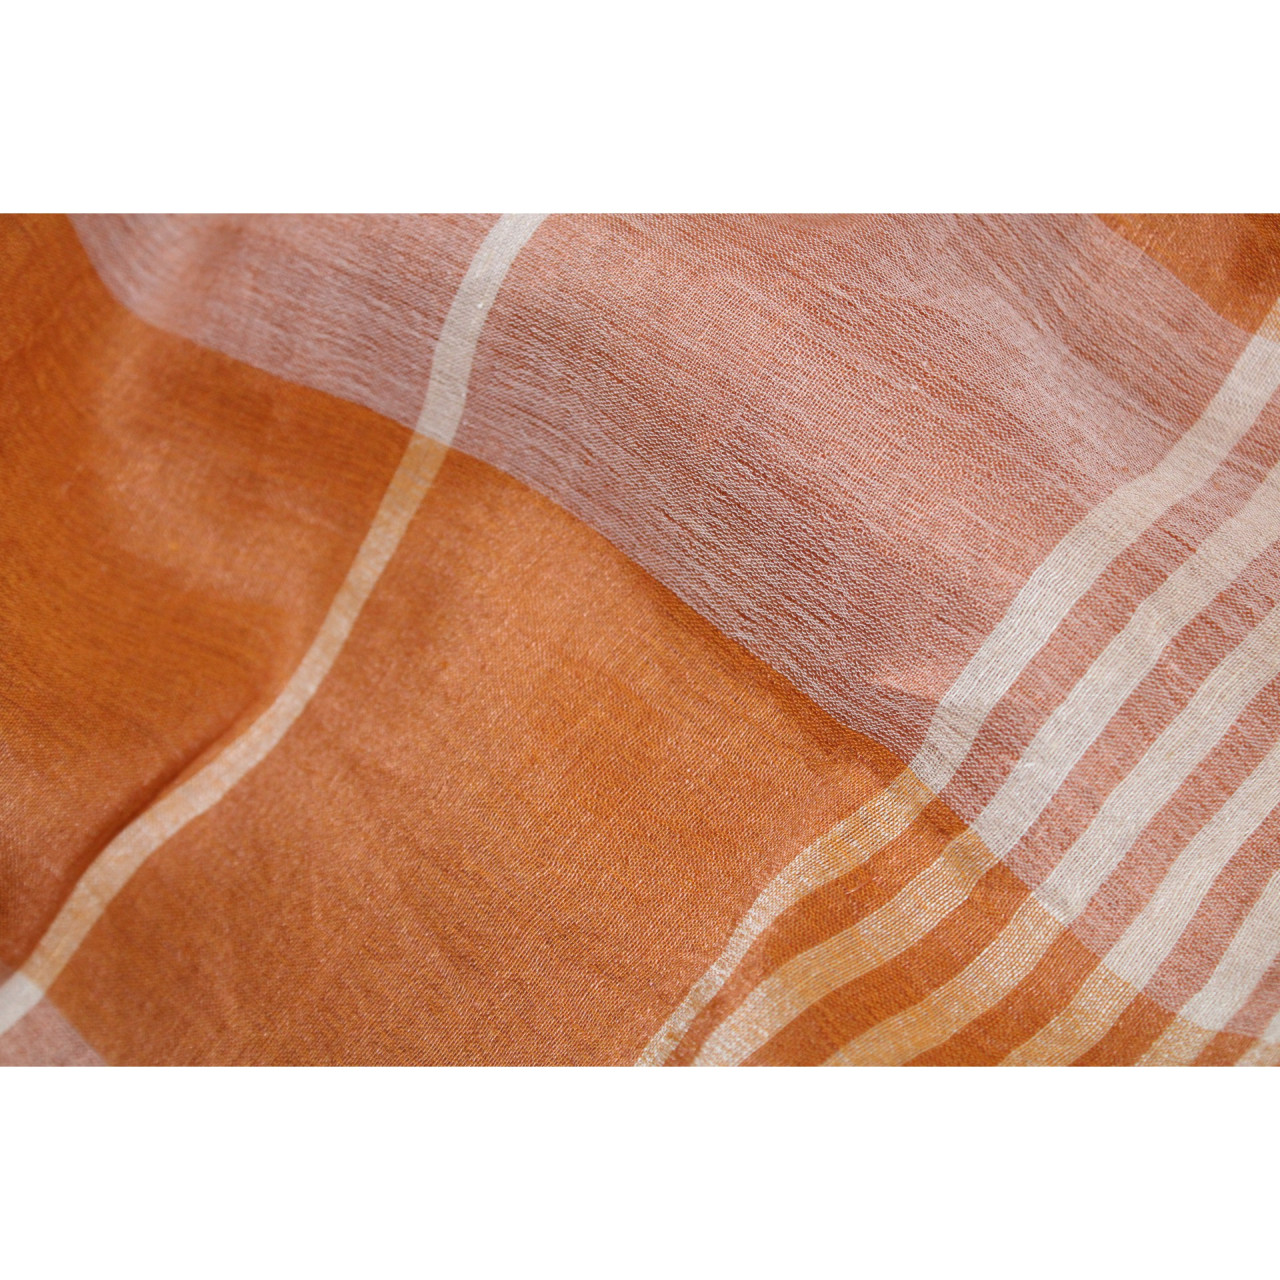 (2157) Khadi  and linen Azo-free dyed stole from Shantipur - Orange, cream, stripes, checks